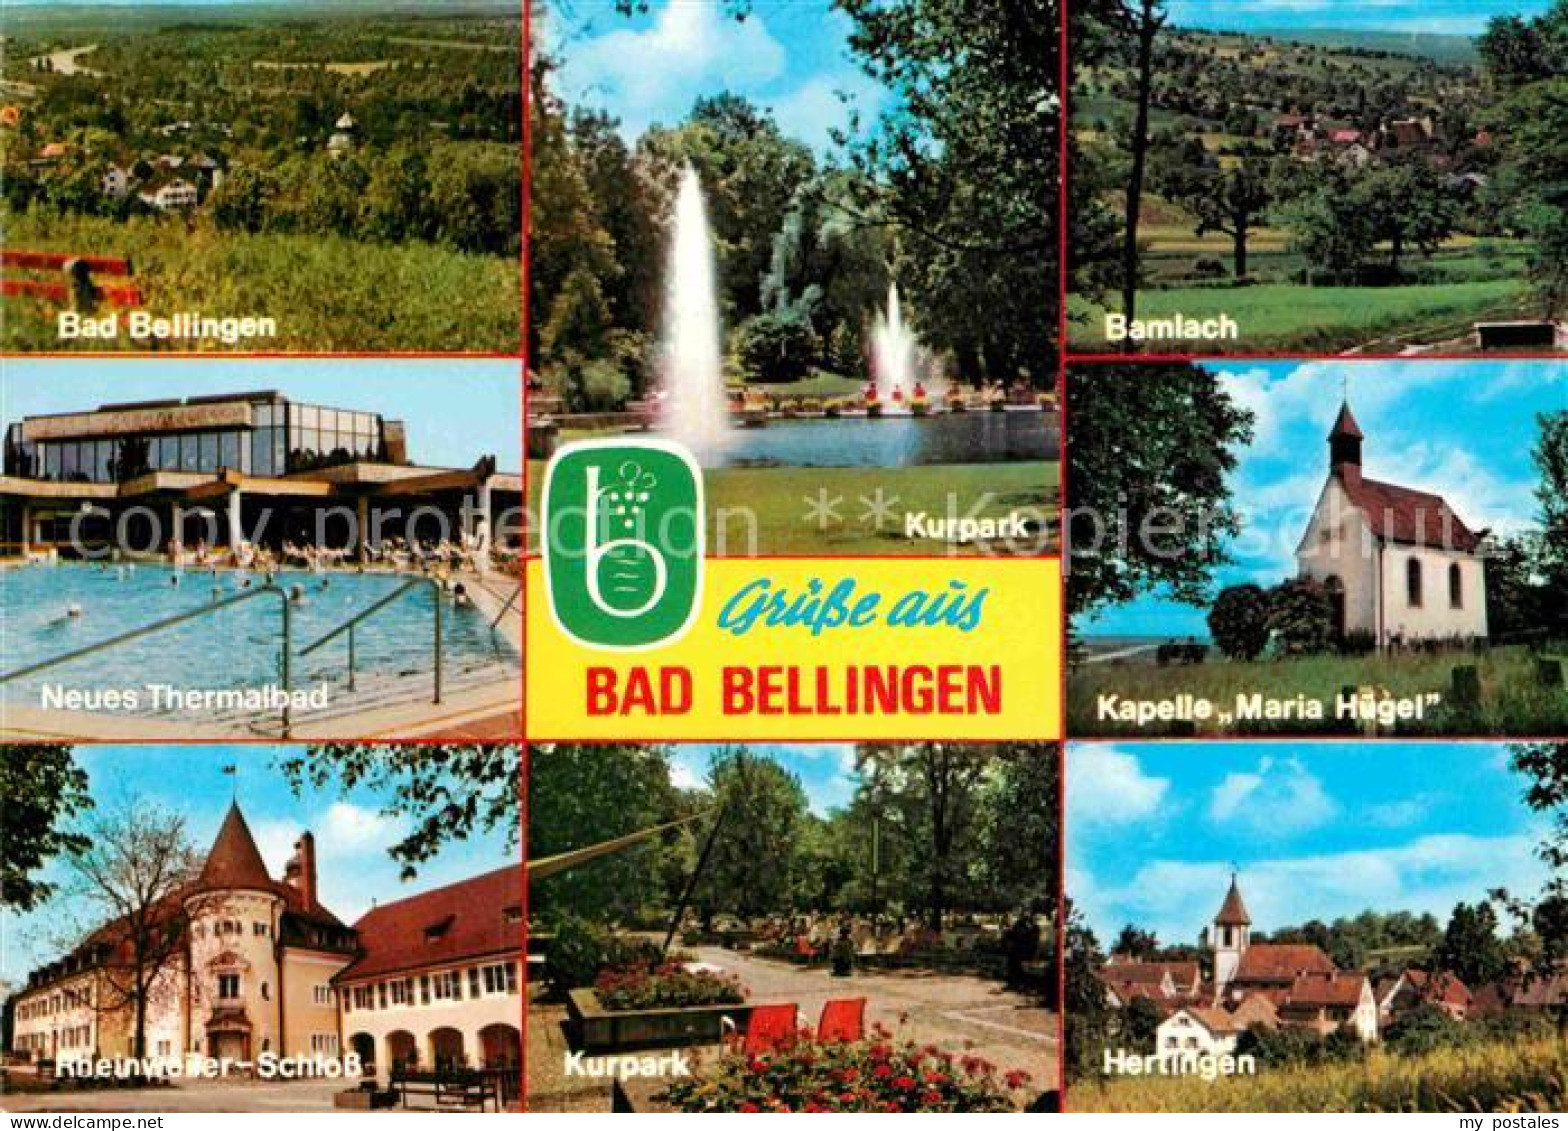 72849229 Bellingen Bad Schwimmbad Kurpark Kapelle Maria Huegel  Bad Bellingen - Bad Bellingen